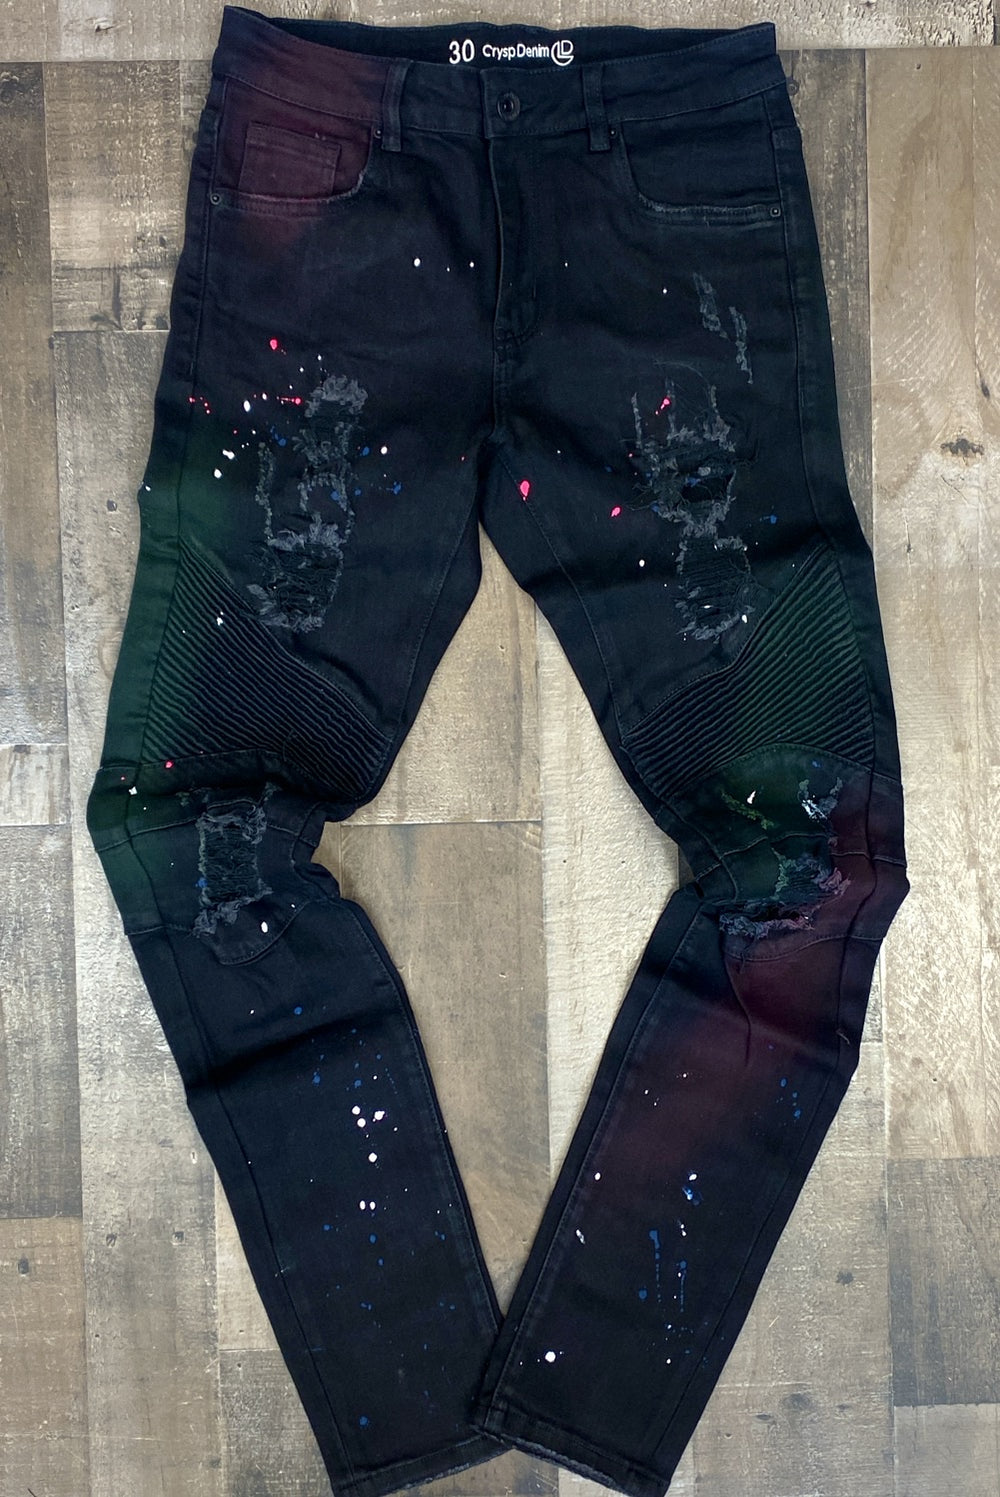 Crysp Denim- spray painted jeans